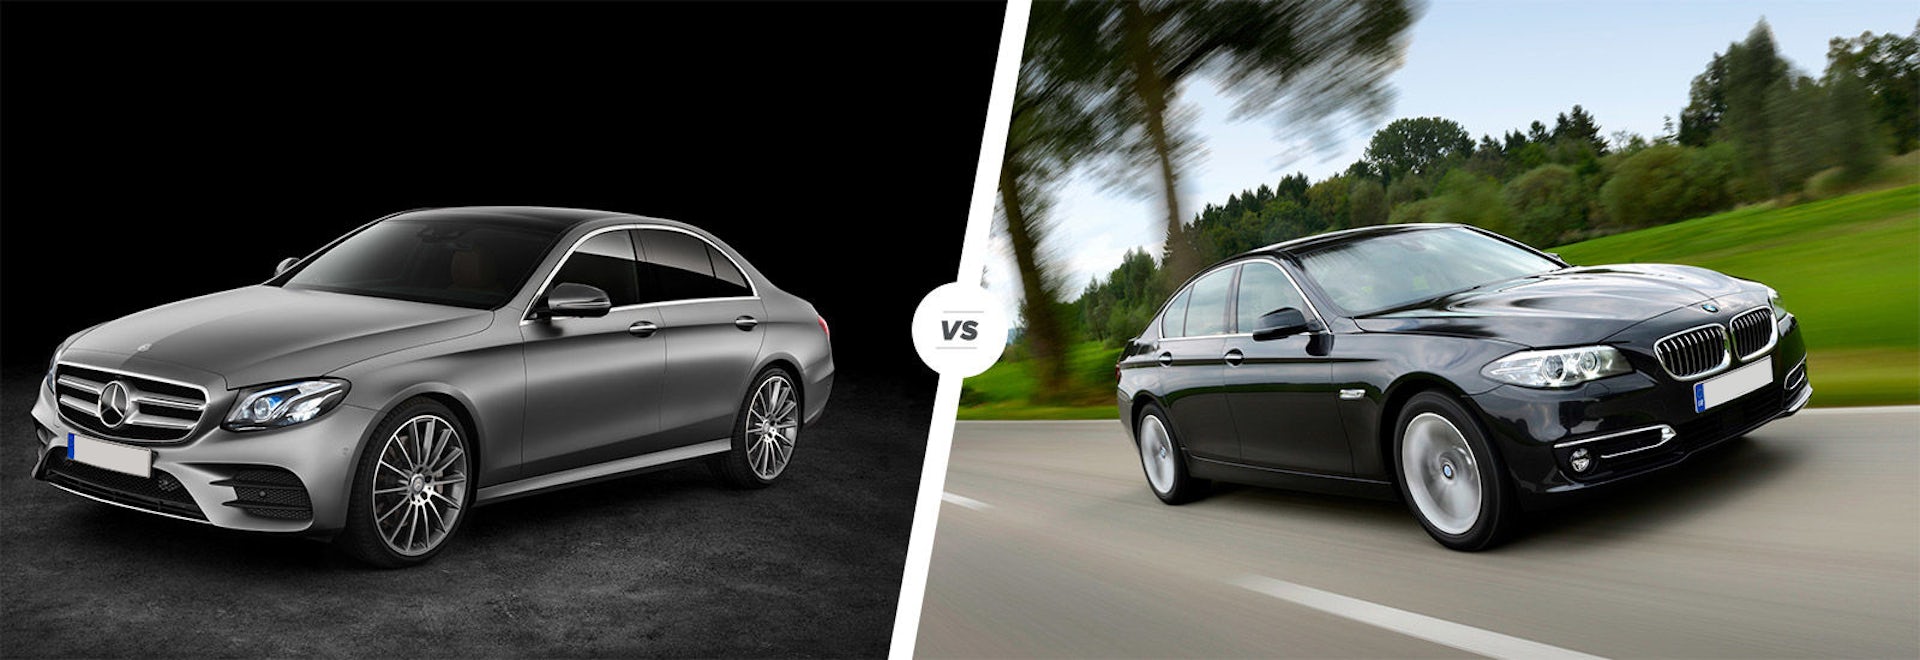 Mercedes EClass vs BMW 5 Series comparison carwow